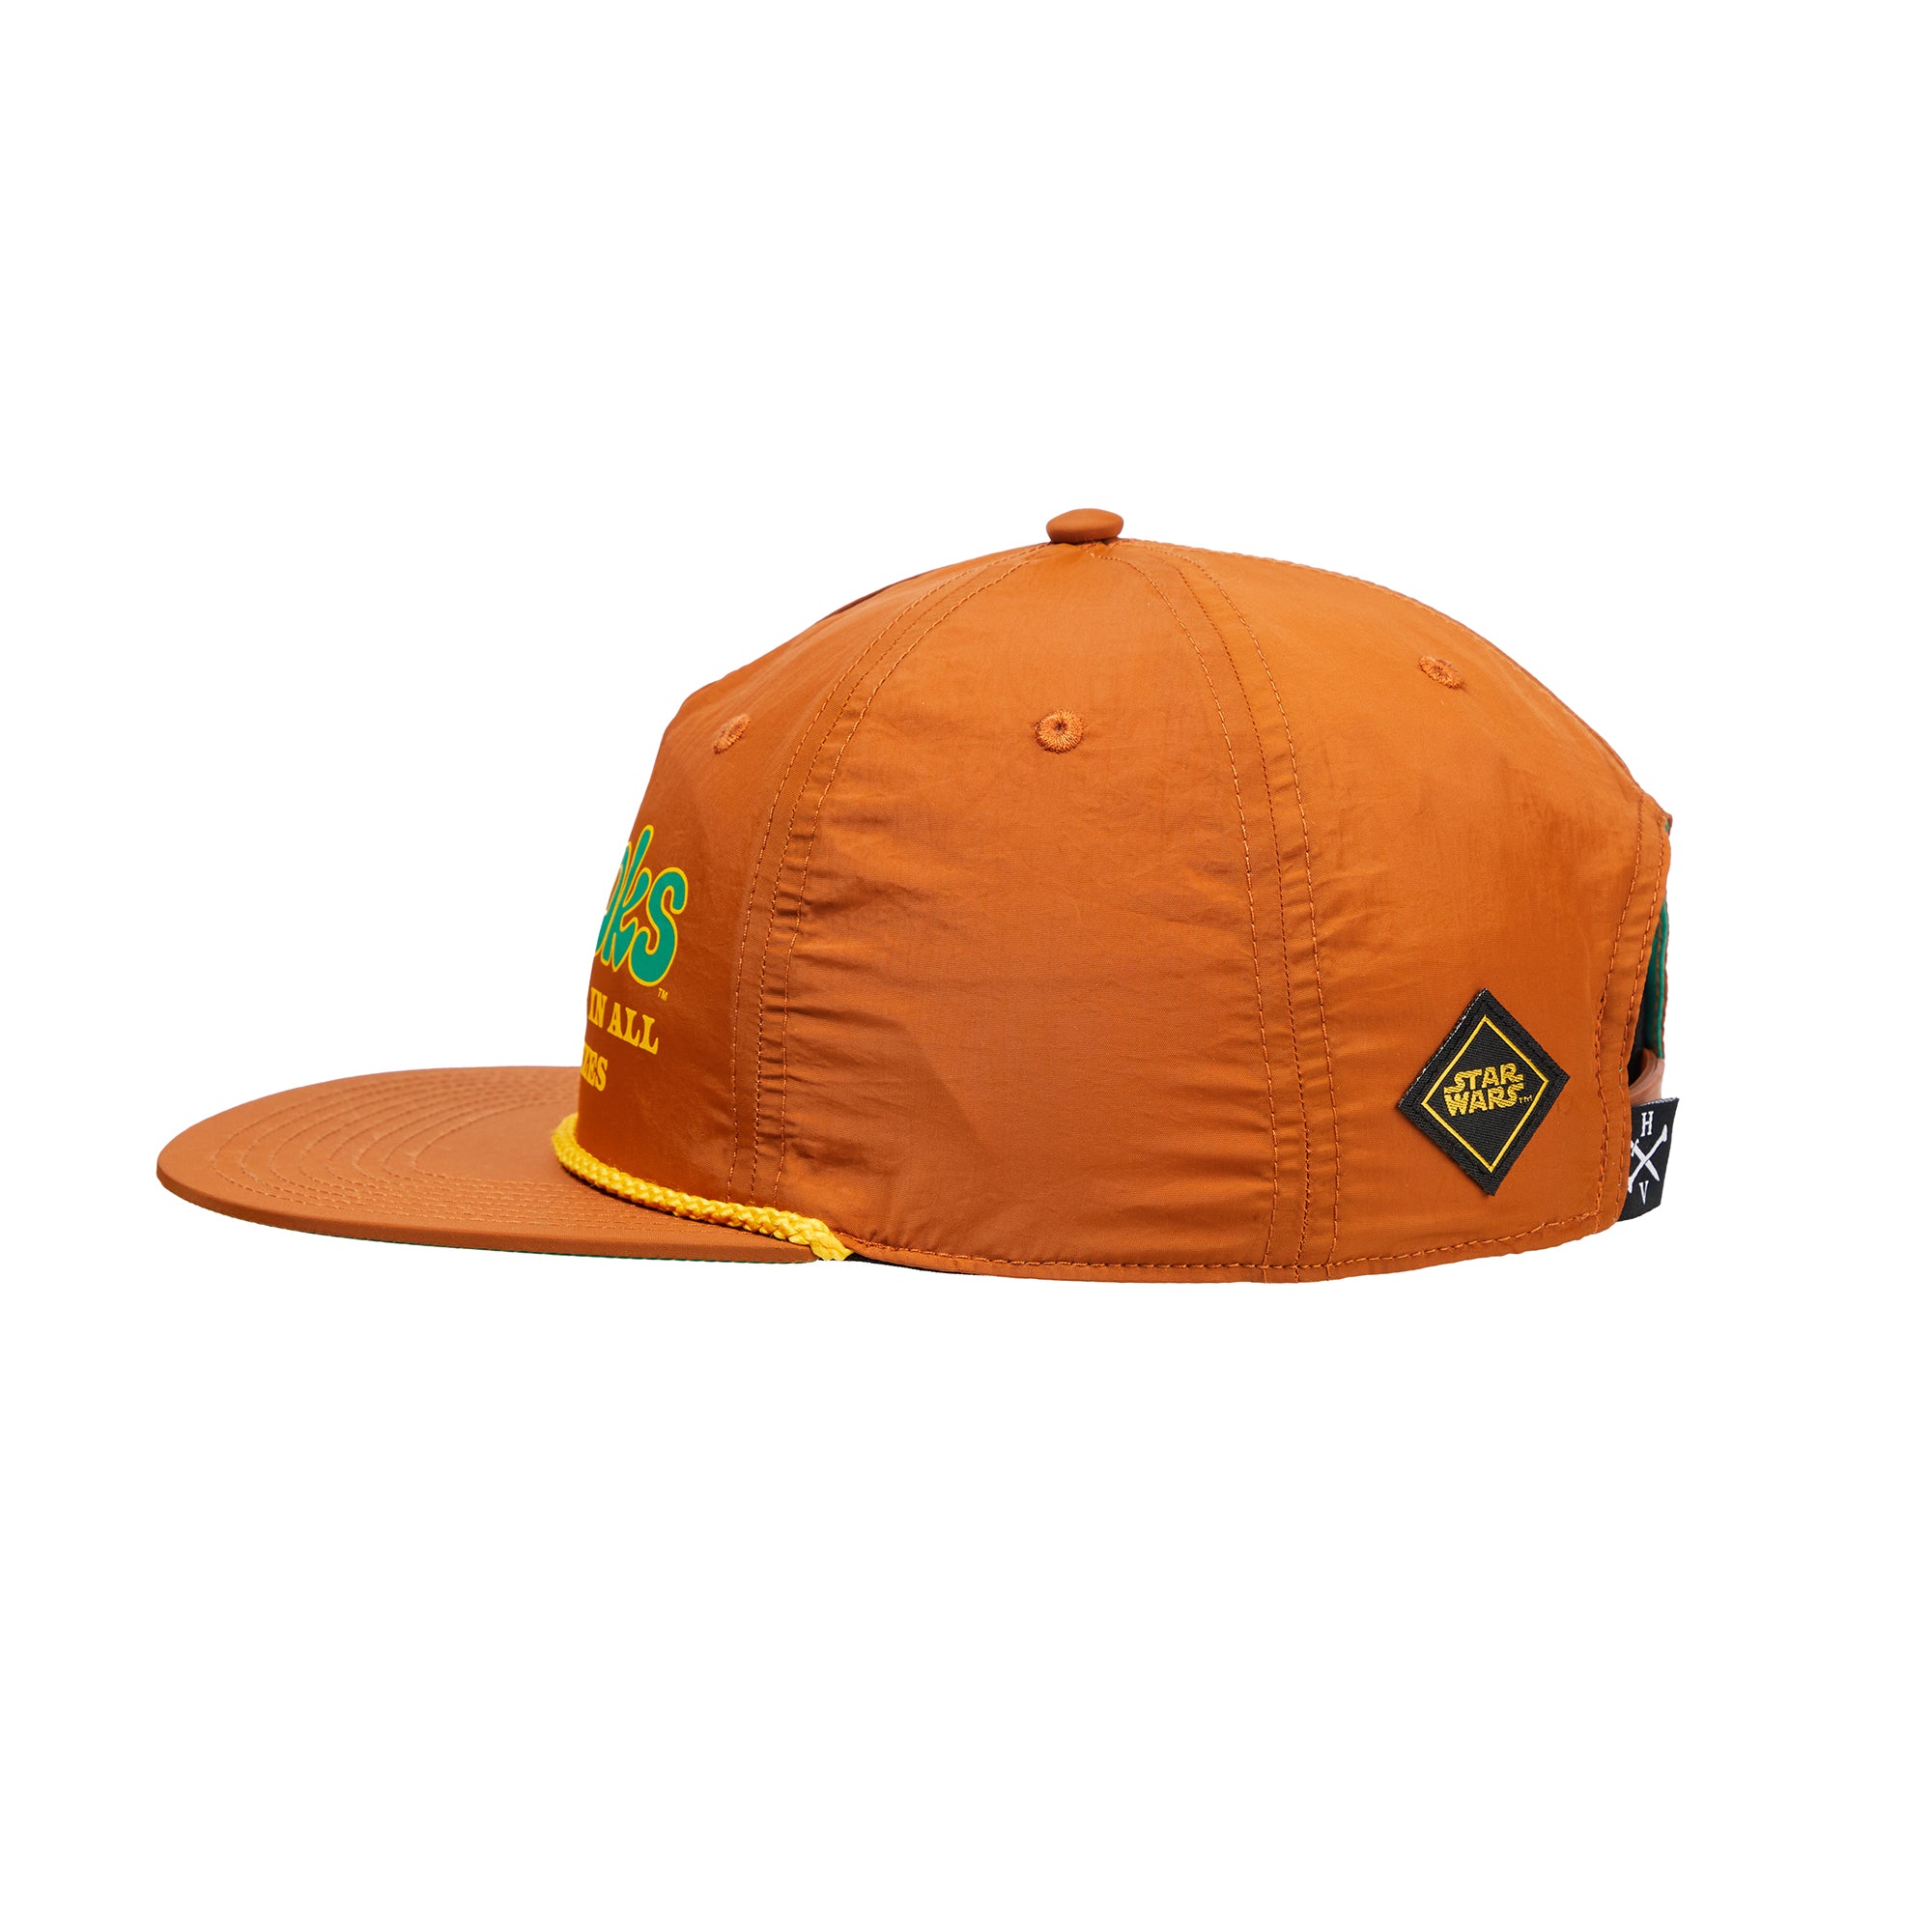 Retro Ewoks Orange Snapback Hat